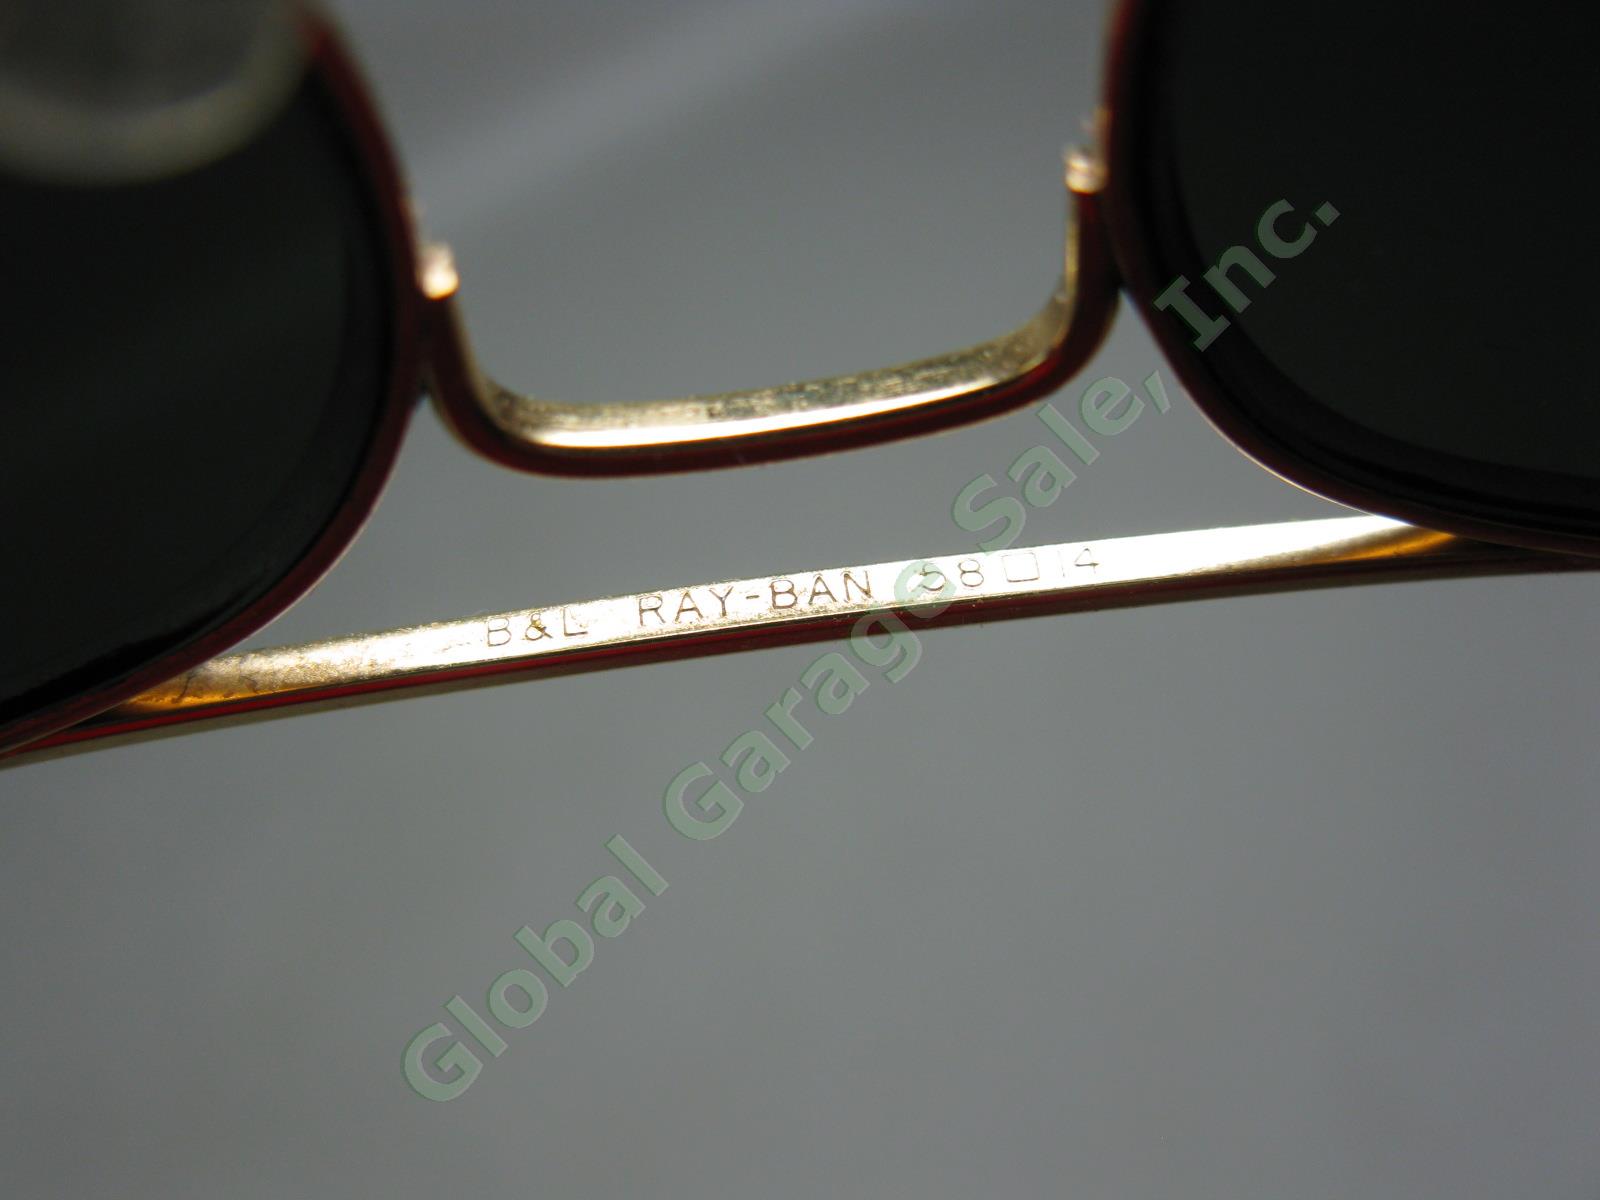 B&L Ray Ban 58 14 Green Lens Gold Aviator Outdoorsman Sunglasses +Belt-Loop Case 4